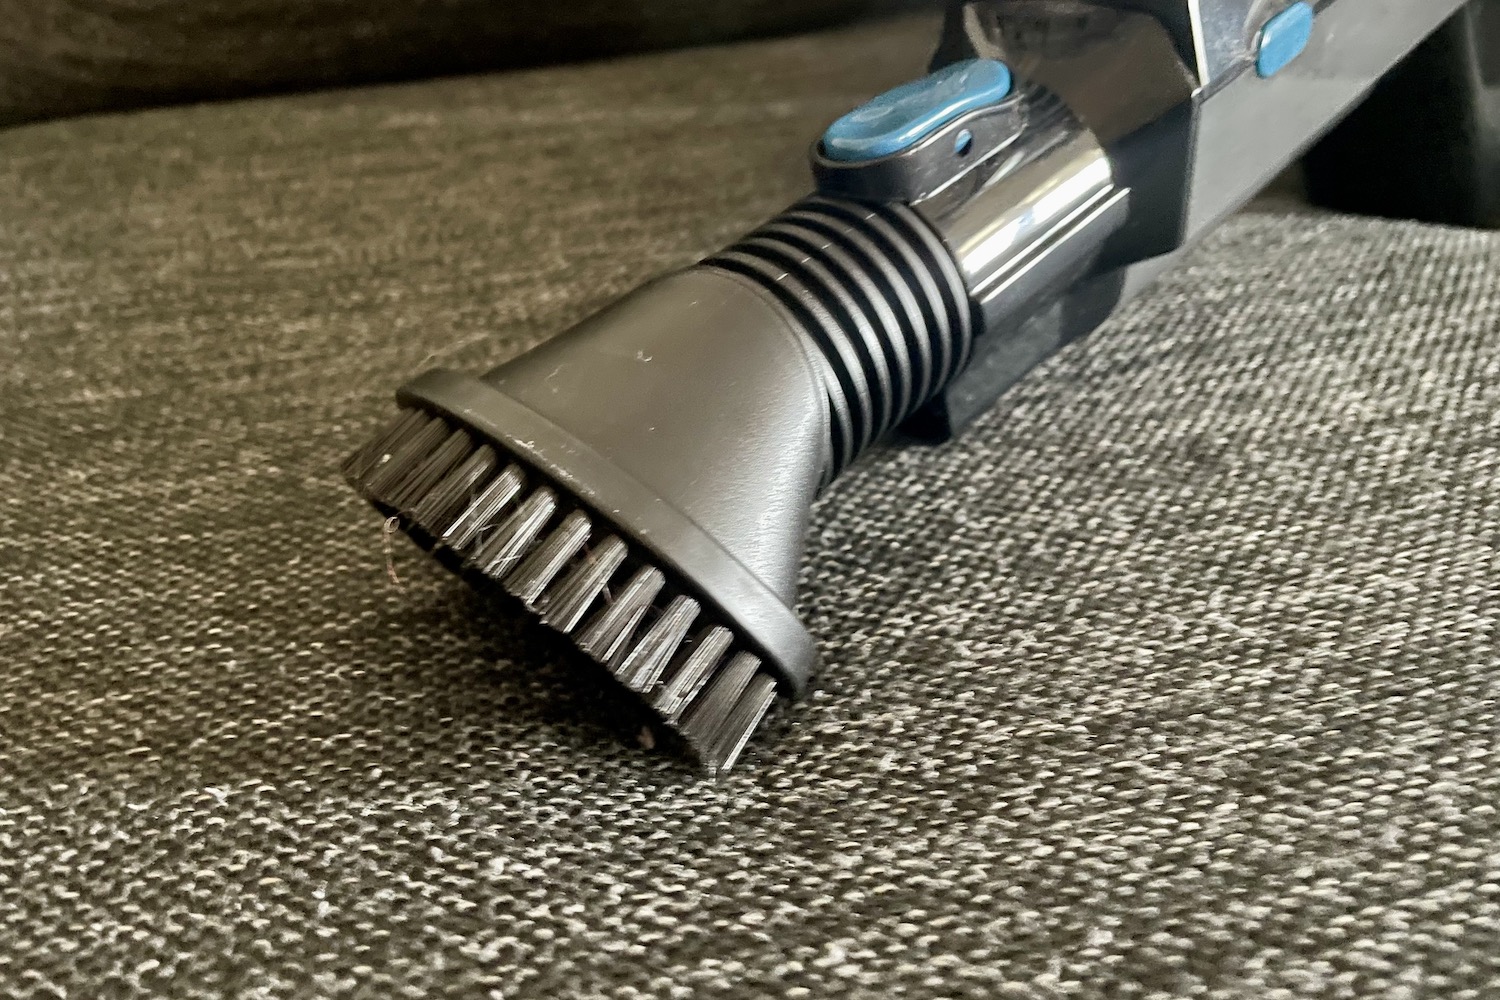 Proscenic P11 Smart Cordless Vacuum review